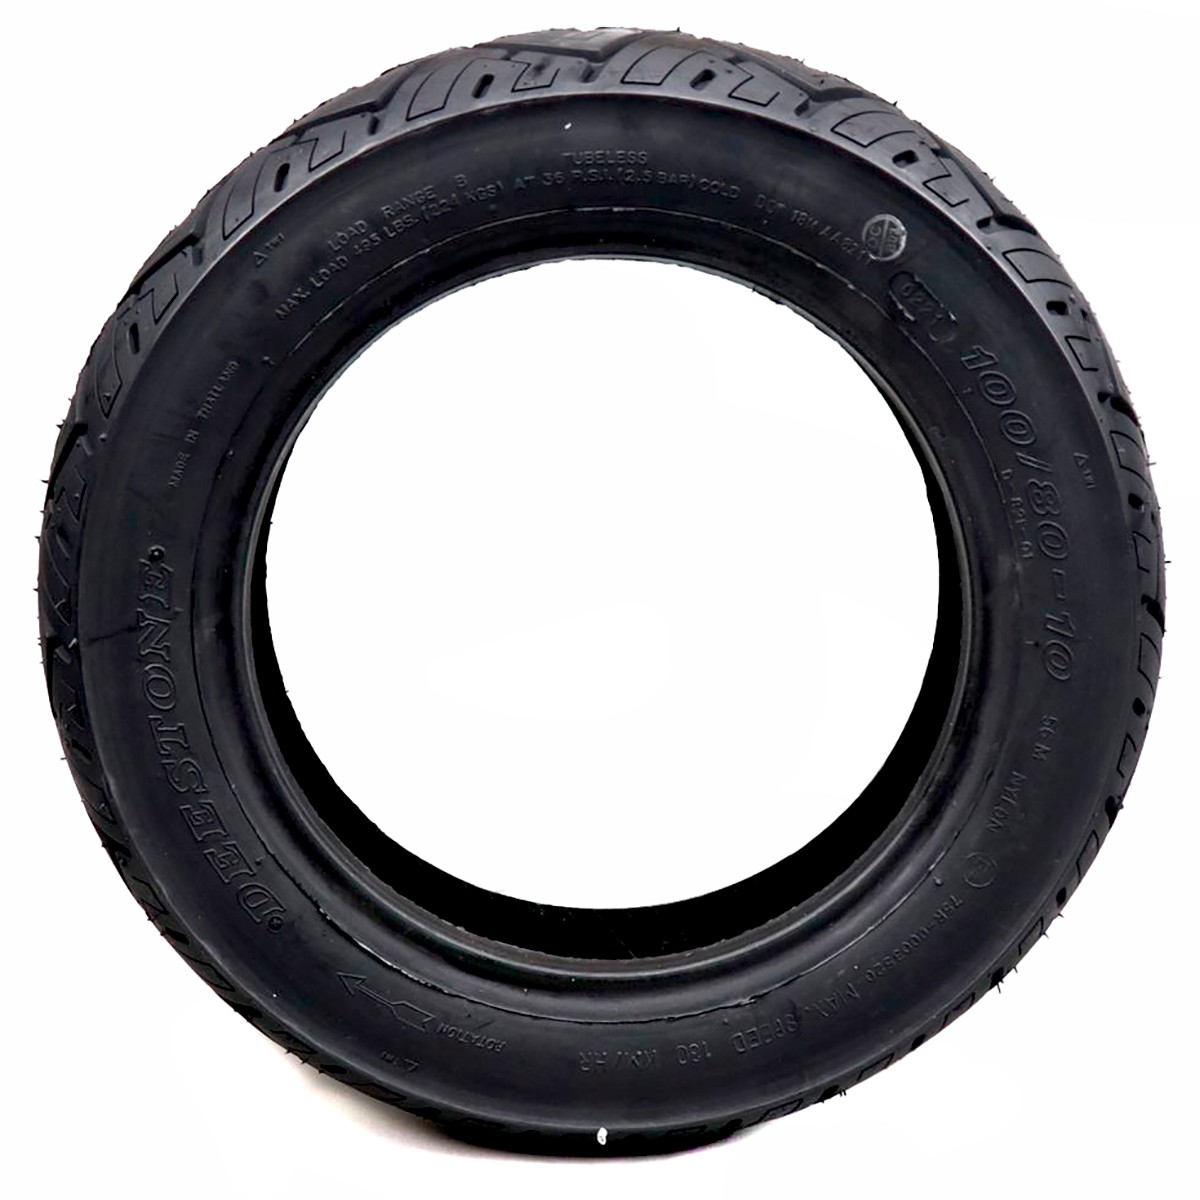 Neumático Scooter Deestone 100/80-10 (3,25-10) D821 56M TL 4PR 1